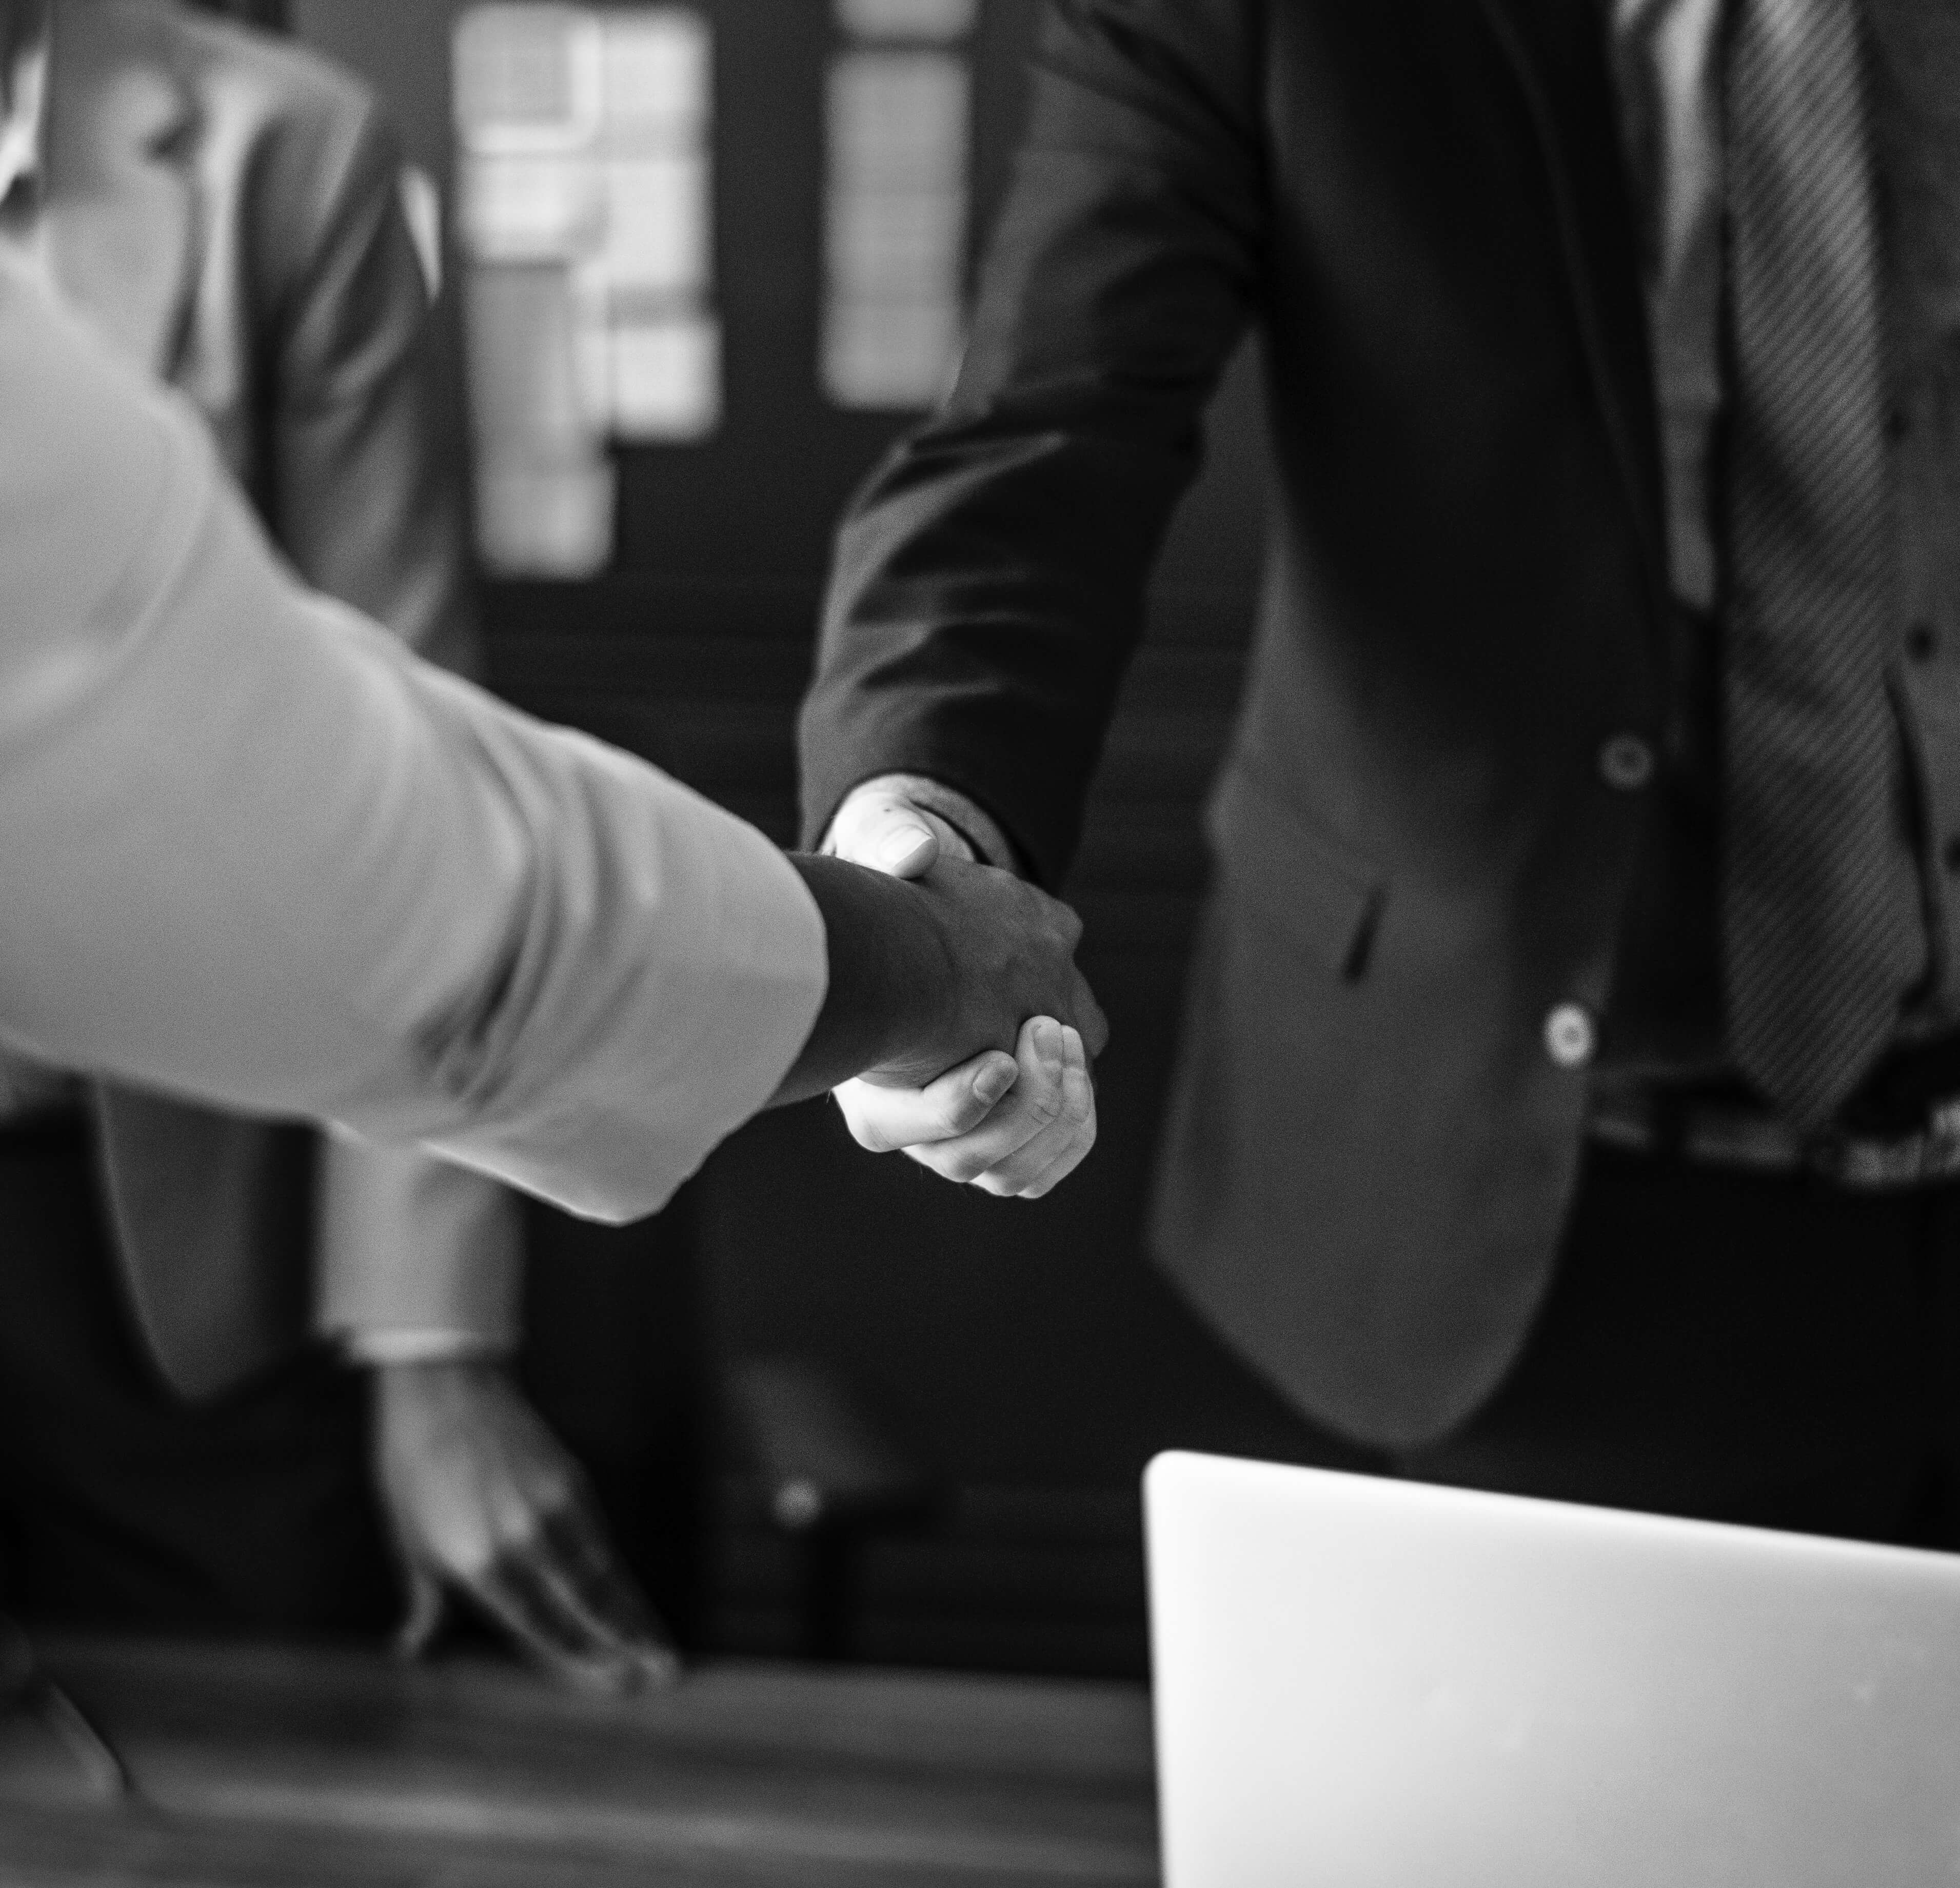 Hand shake between partners closing a deal